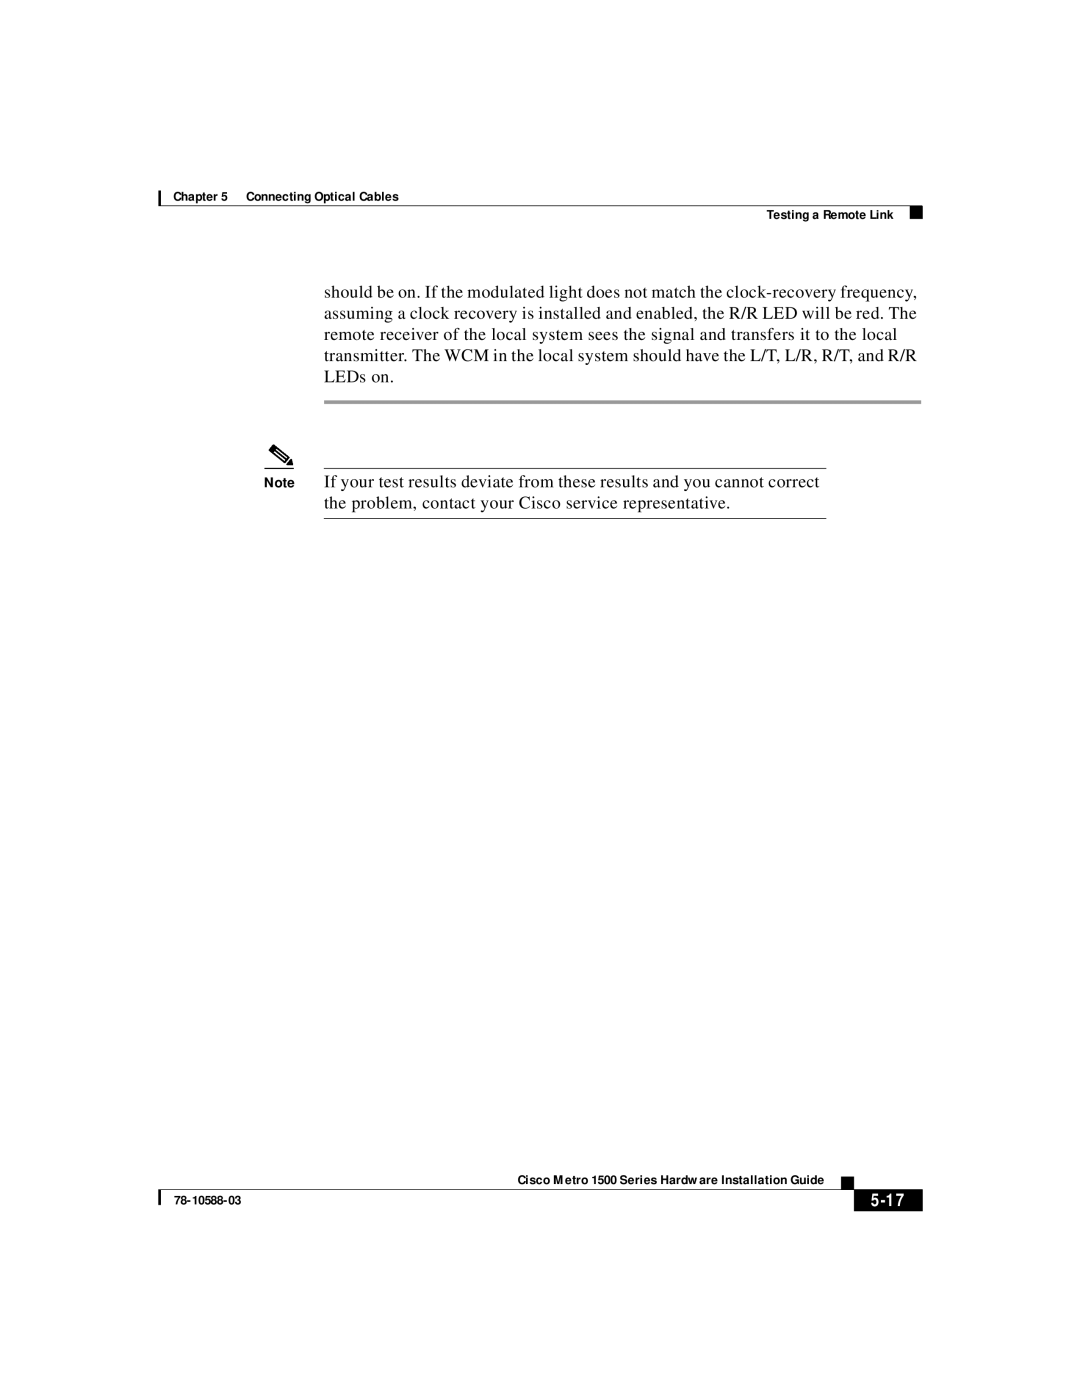 Cisco Systems 1500 manual 5-17 